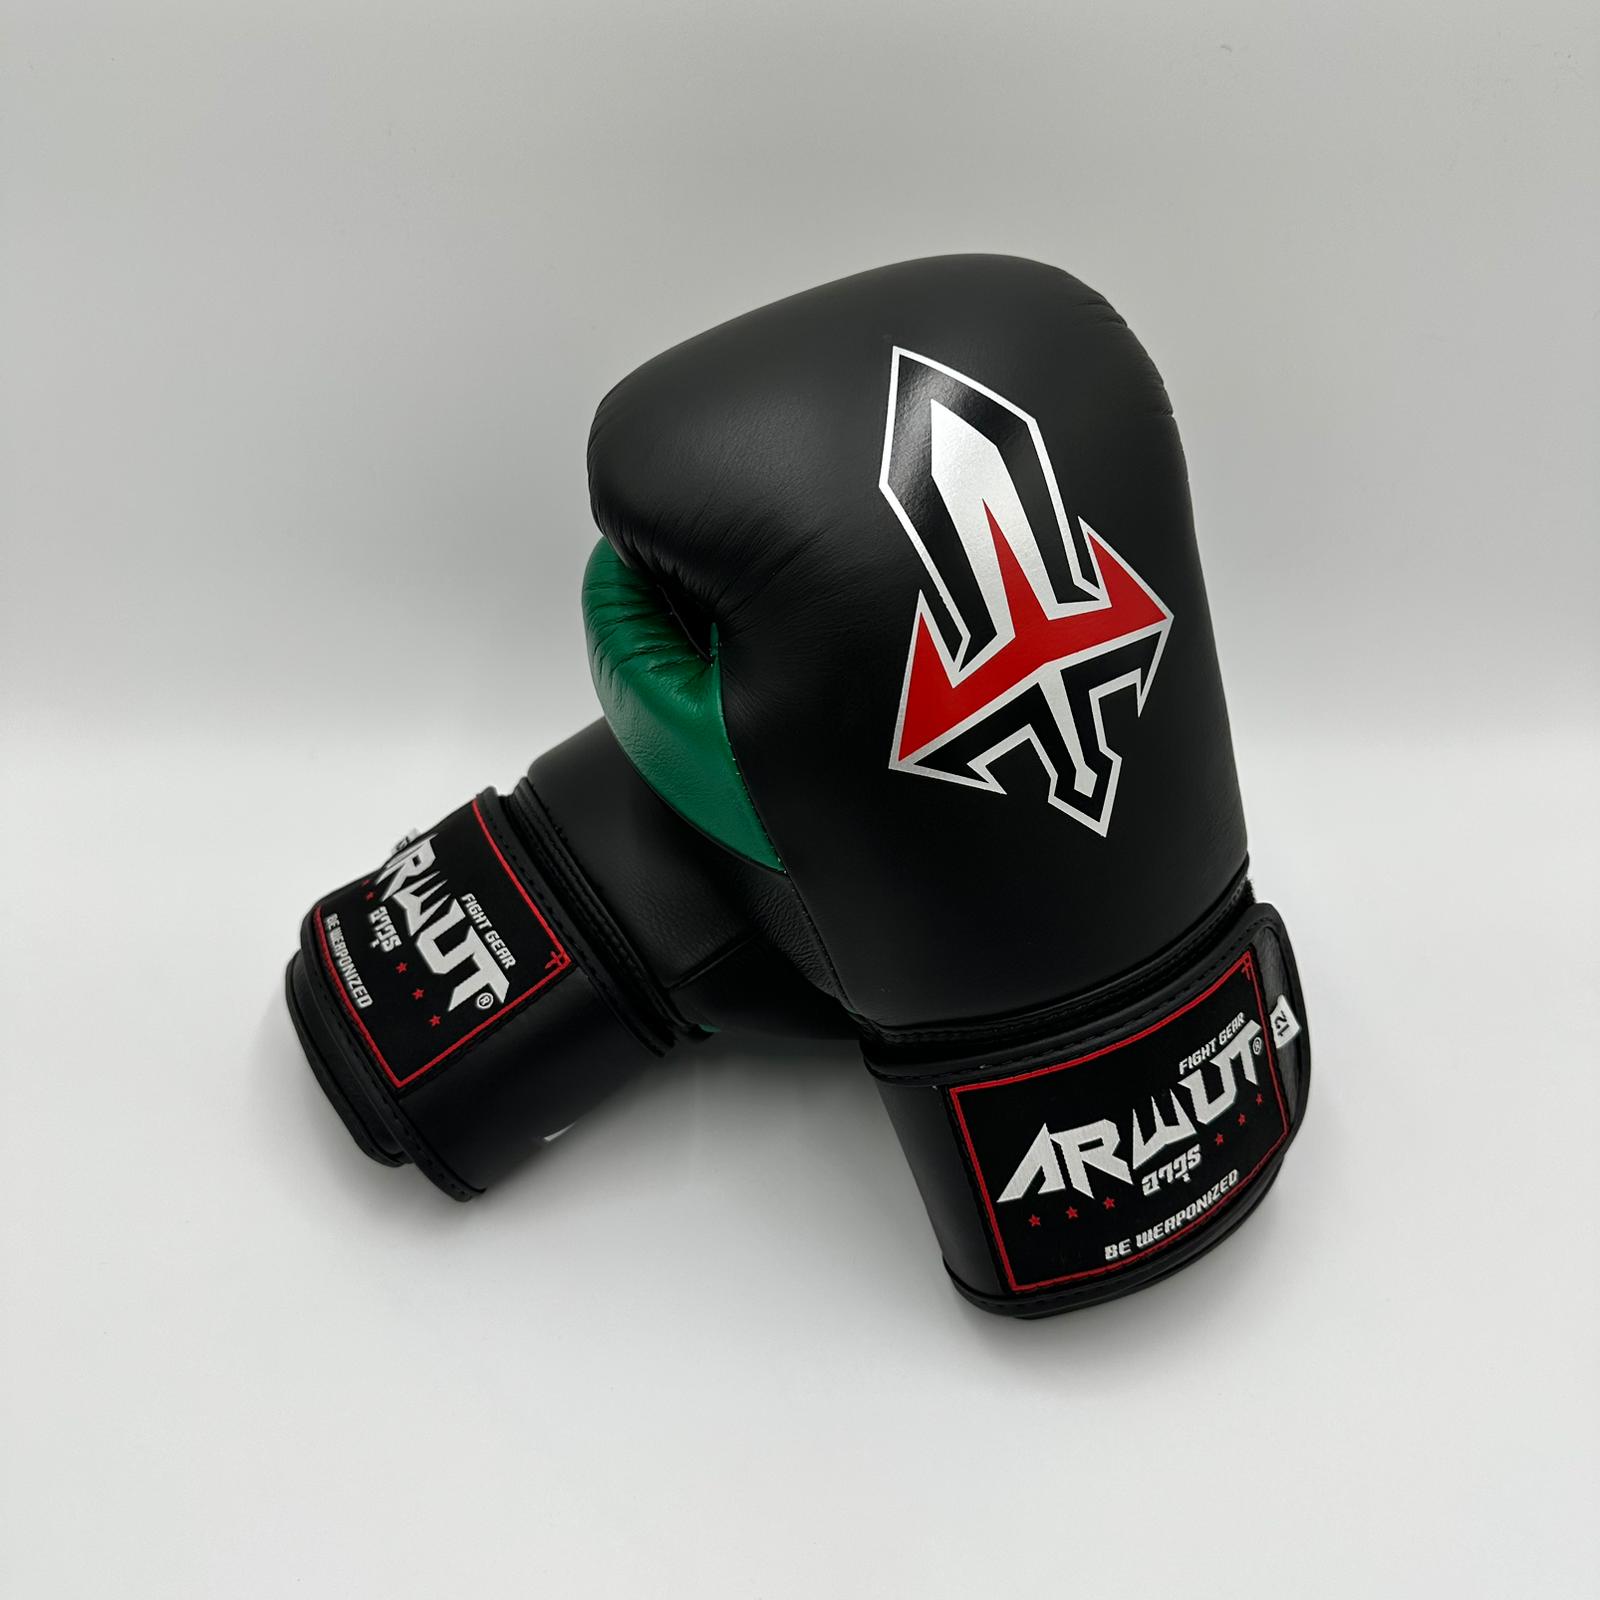 Arwut Muay Thai Boxing Gloves BG2 - Version 2.0